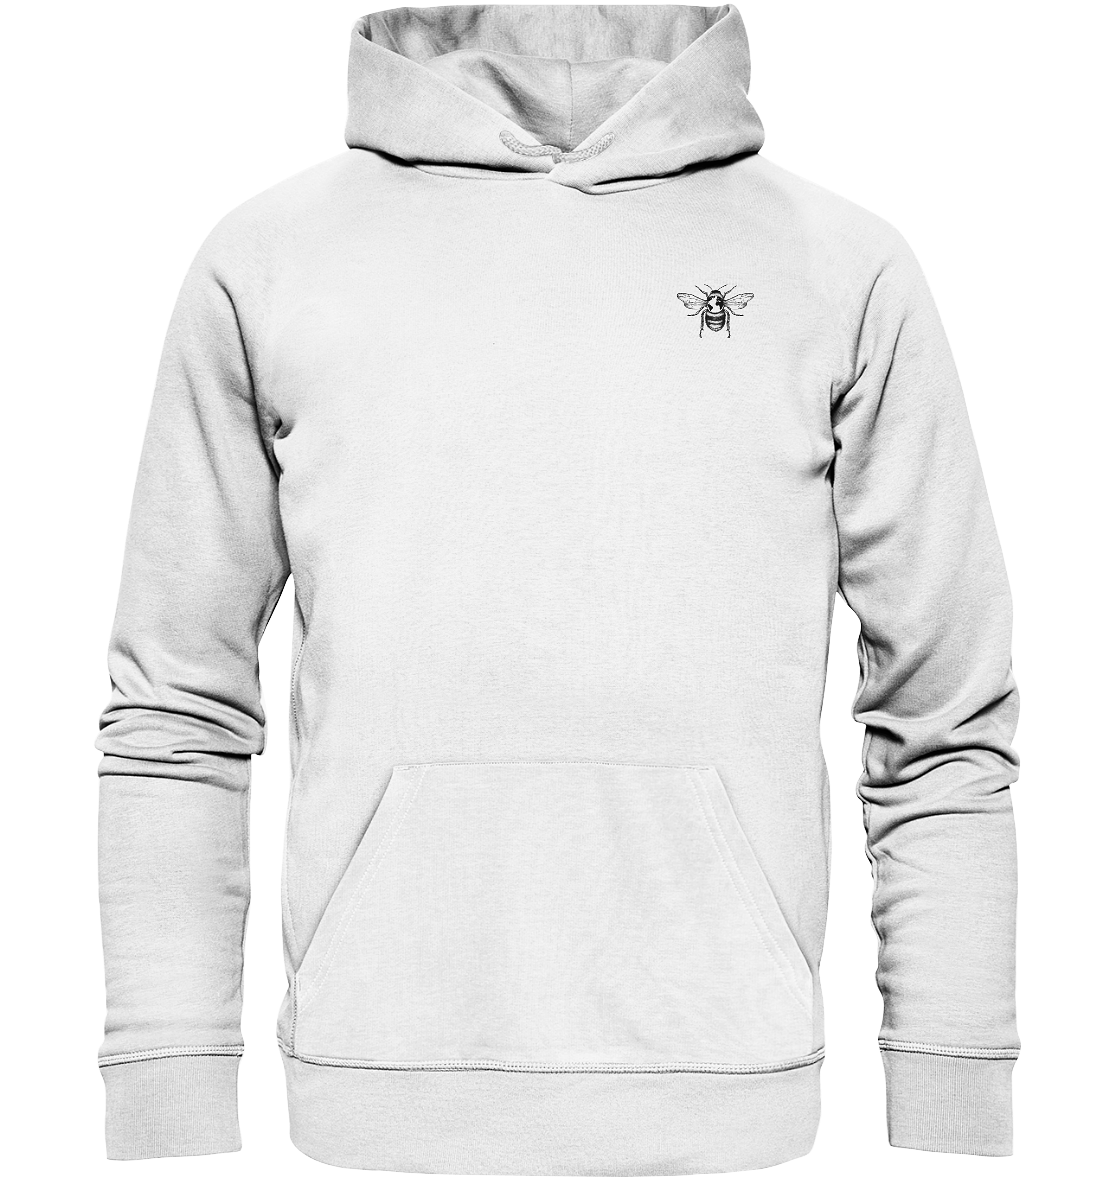 front-organic-hoodie-f8f8f8-1116x.png